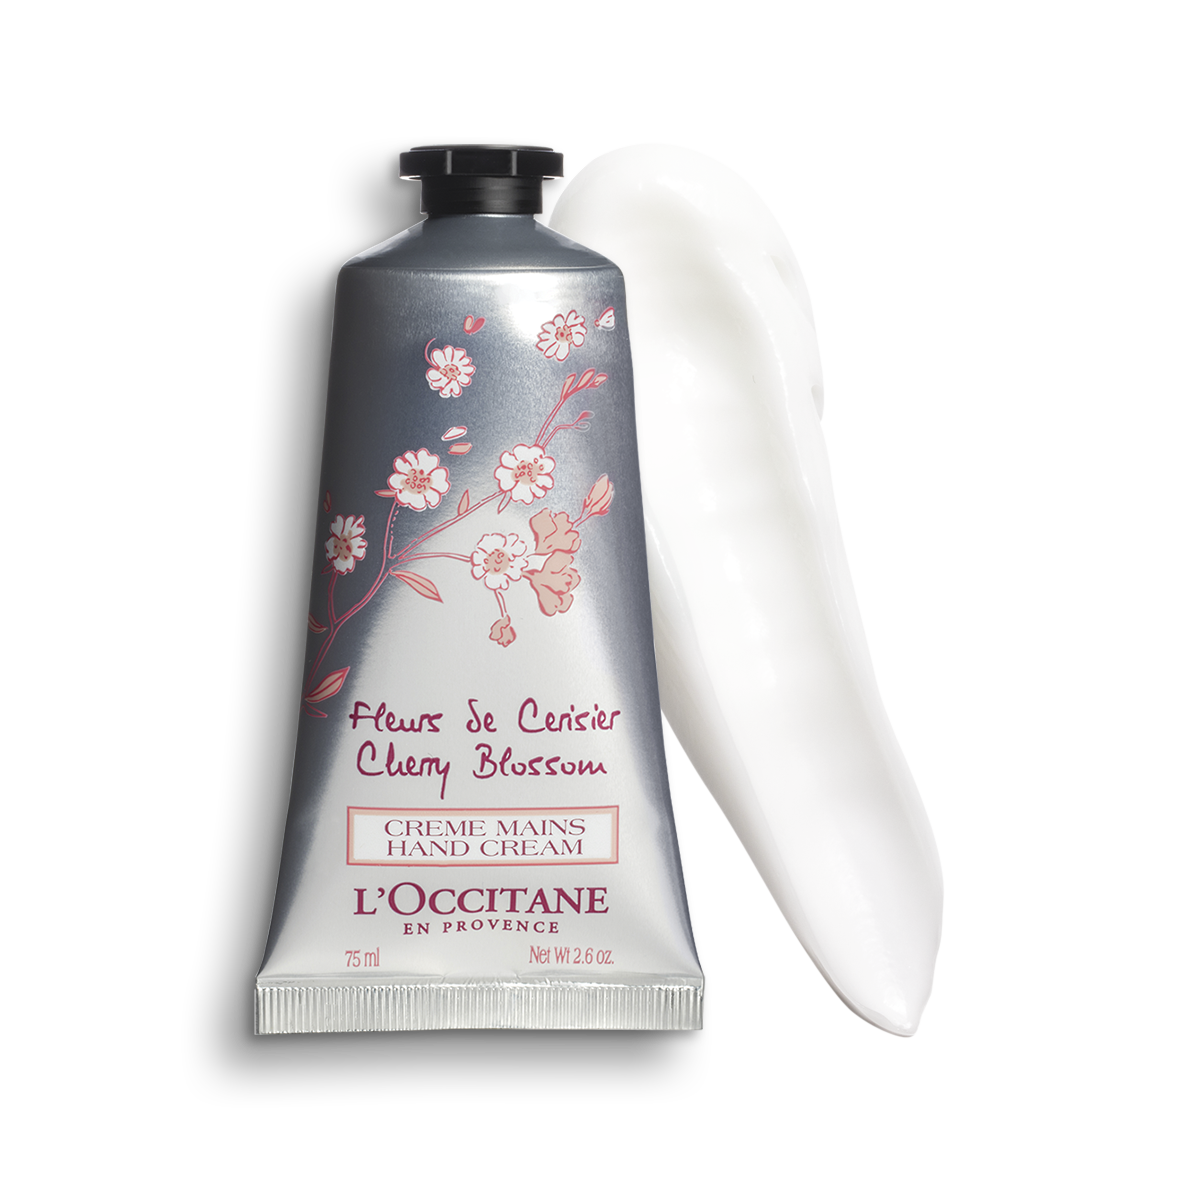 Blossoms крем. L'Occitane Creme mains hand Cream. Крем l'Occitane fleurs de cerisier. L'Occitane en Provence крем. Крем для рук 75 ml от l'Occitane.